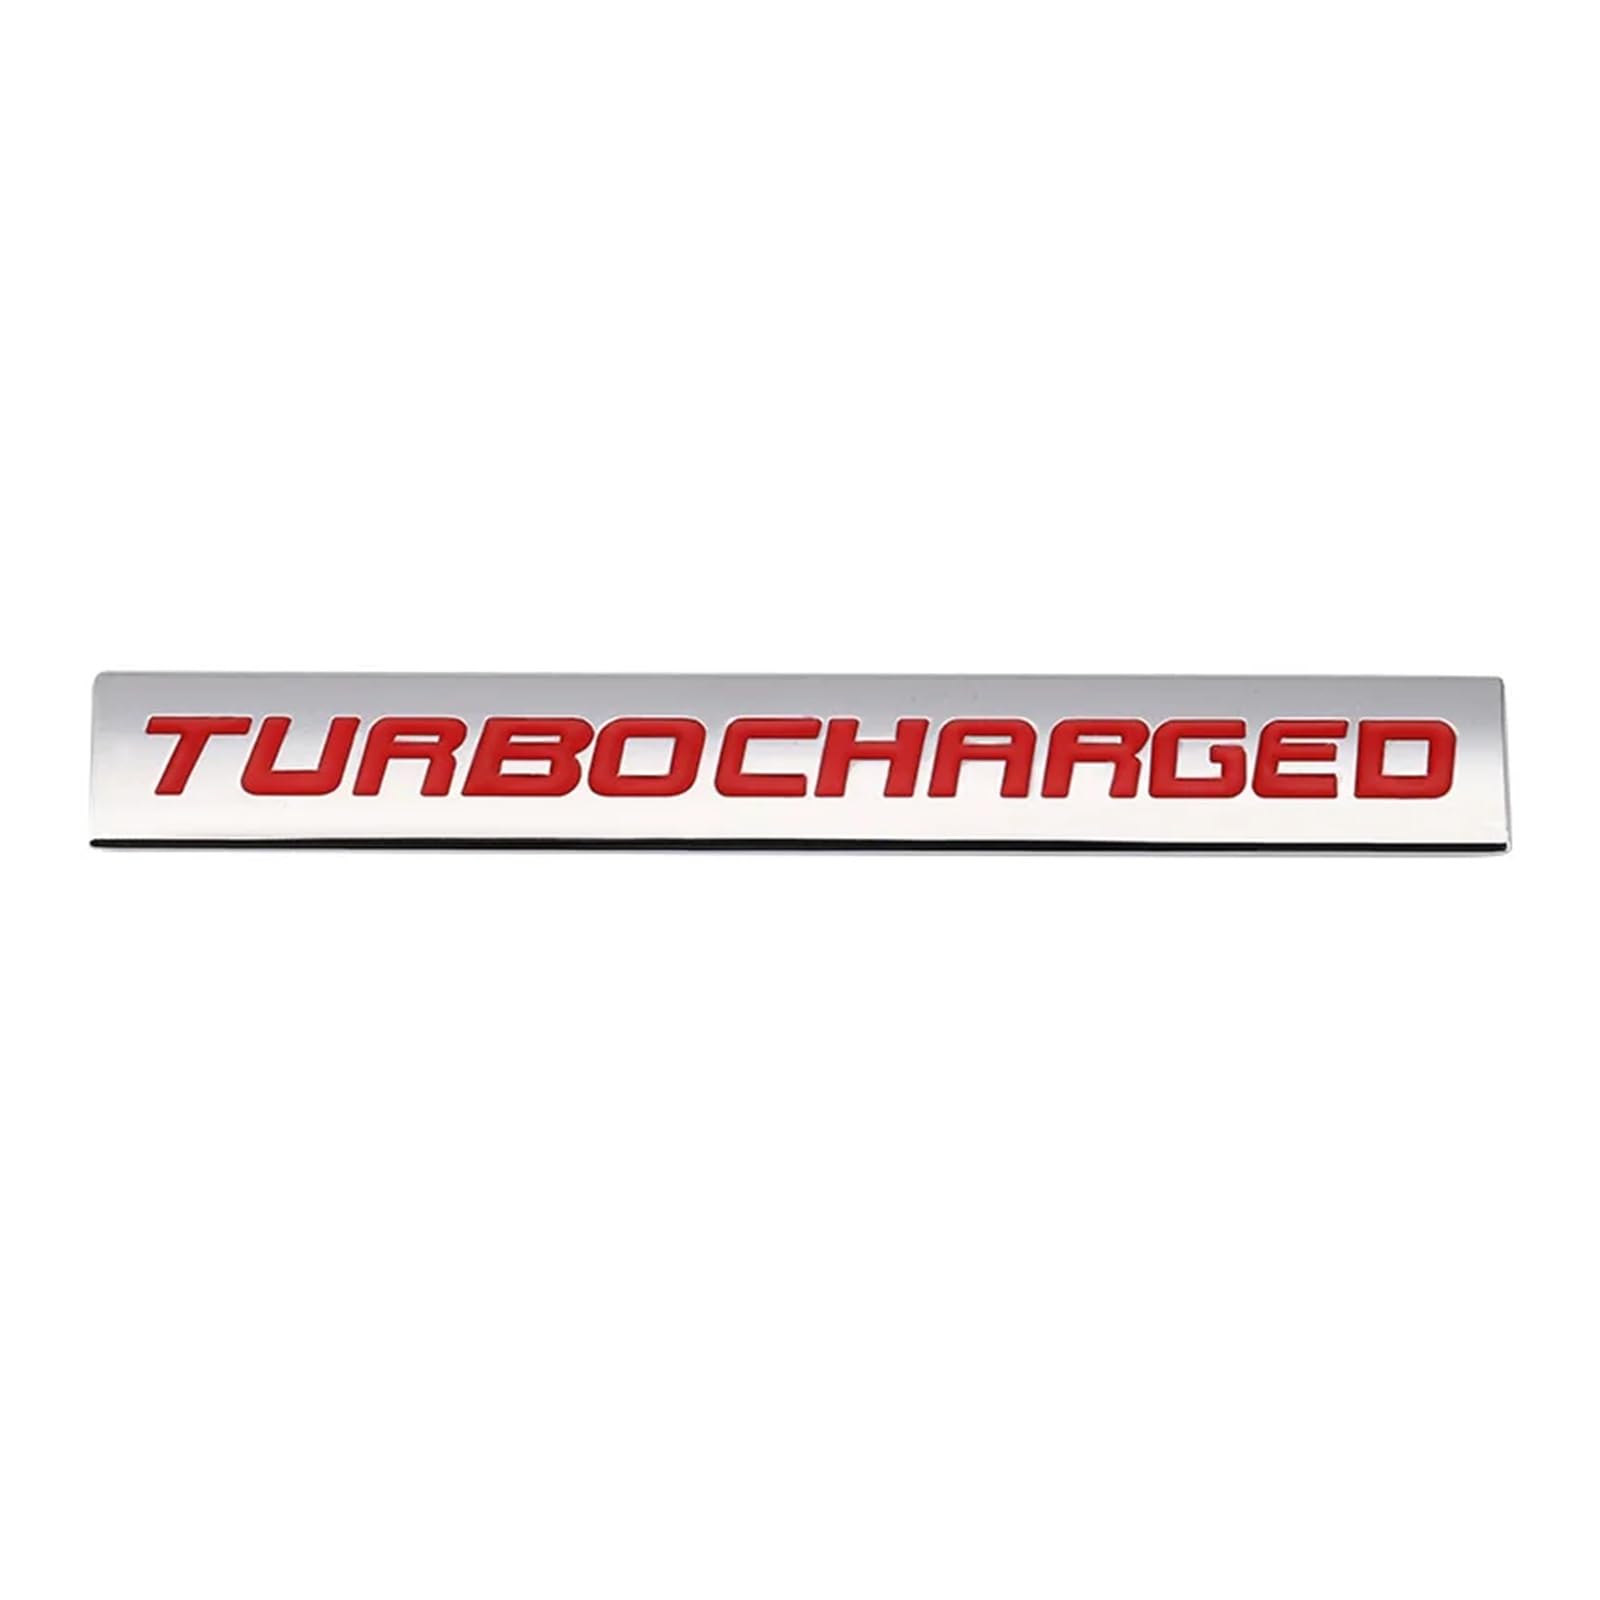 AQXYWQOL 3D Metall Auto Aufkleber TWIN Turbo Turbolader Kompressor Emblem Abzeichen Aufkleber Farbe ist konstant, verblasst nicht und beschädigt(Turbocharged-01) von AQXYWQOL